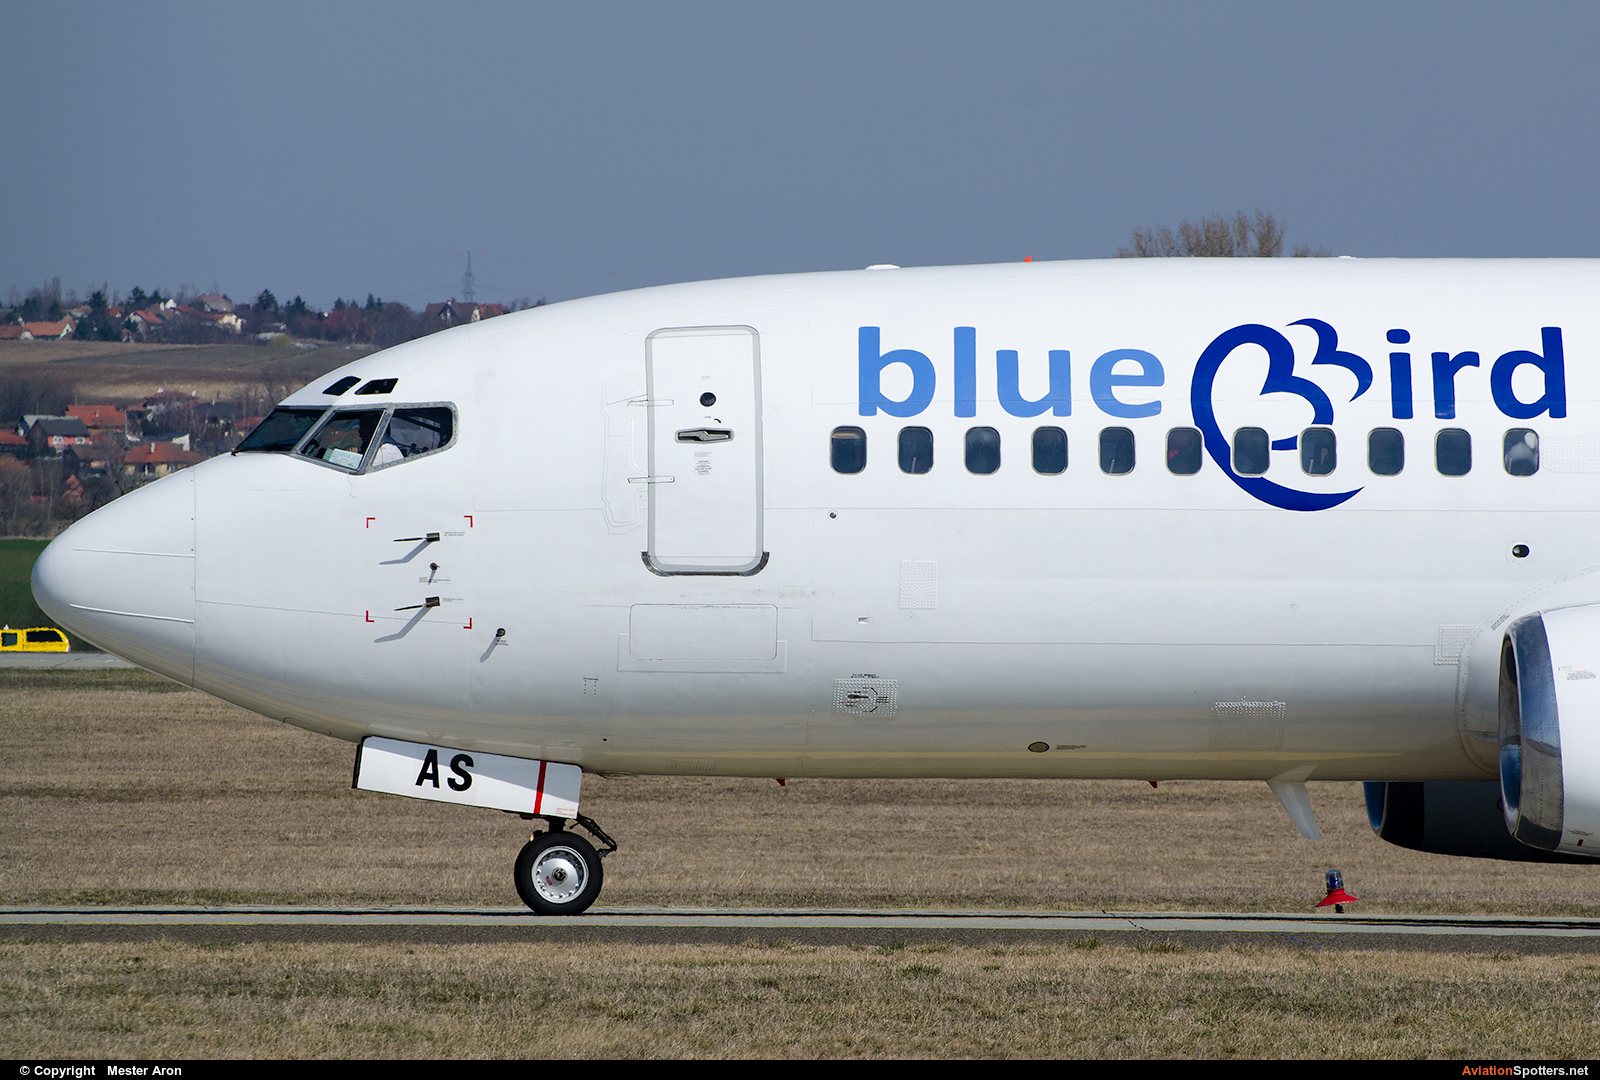 Bluebird Airways  -  737-300  (9H-TAS) By Mester Aron (MesterAron)